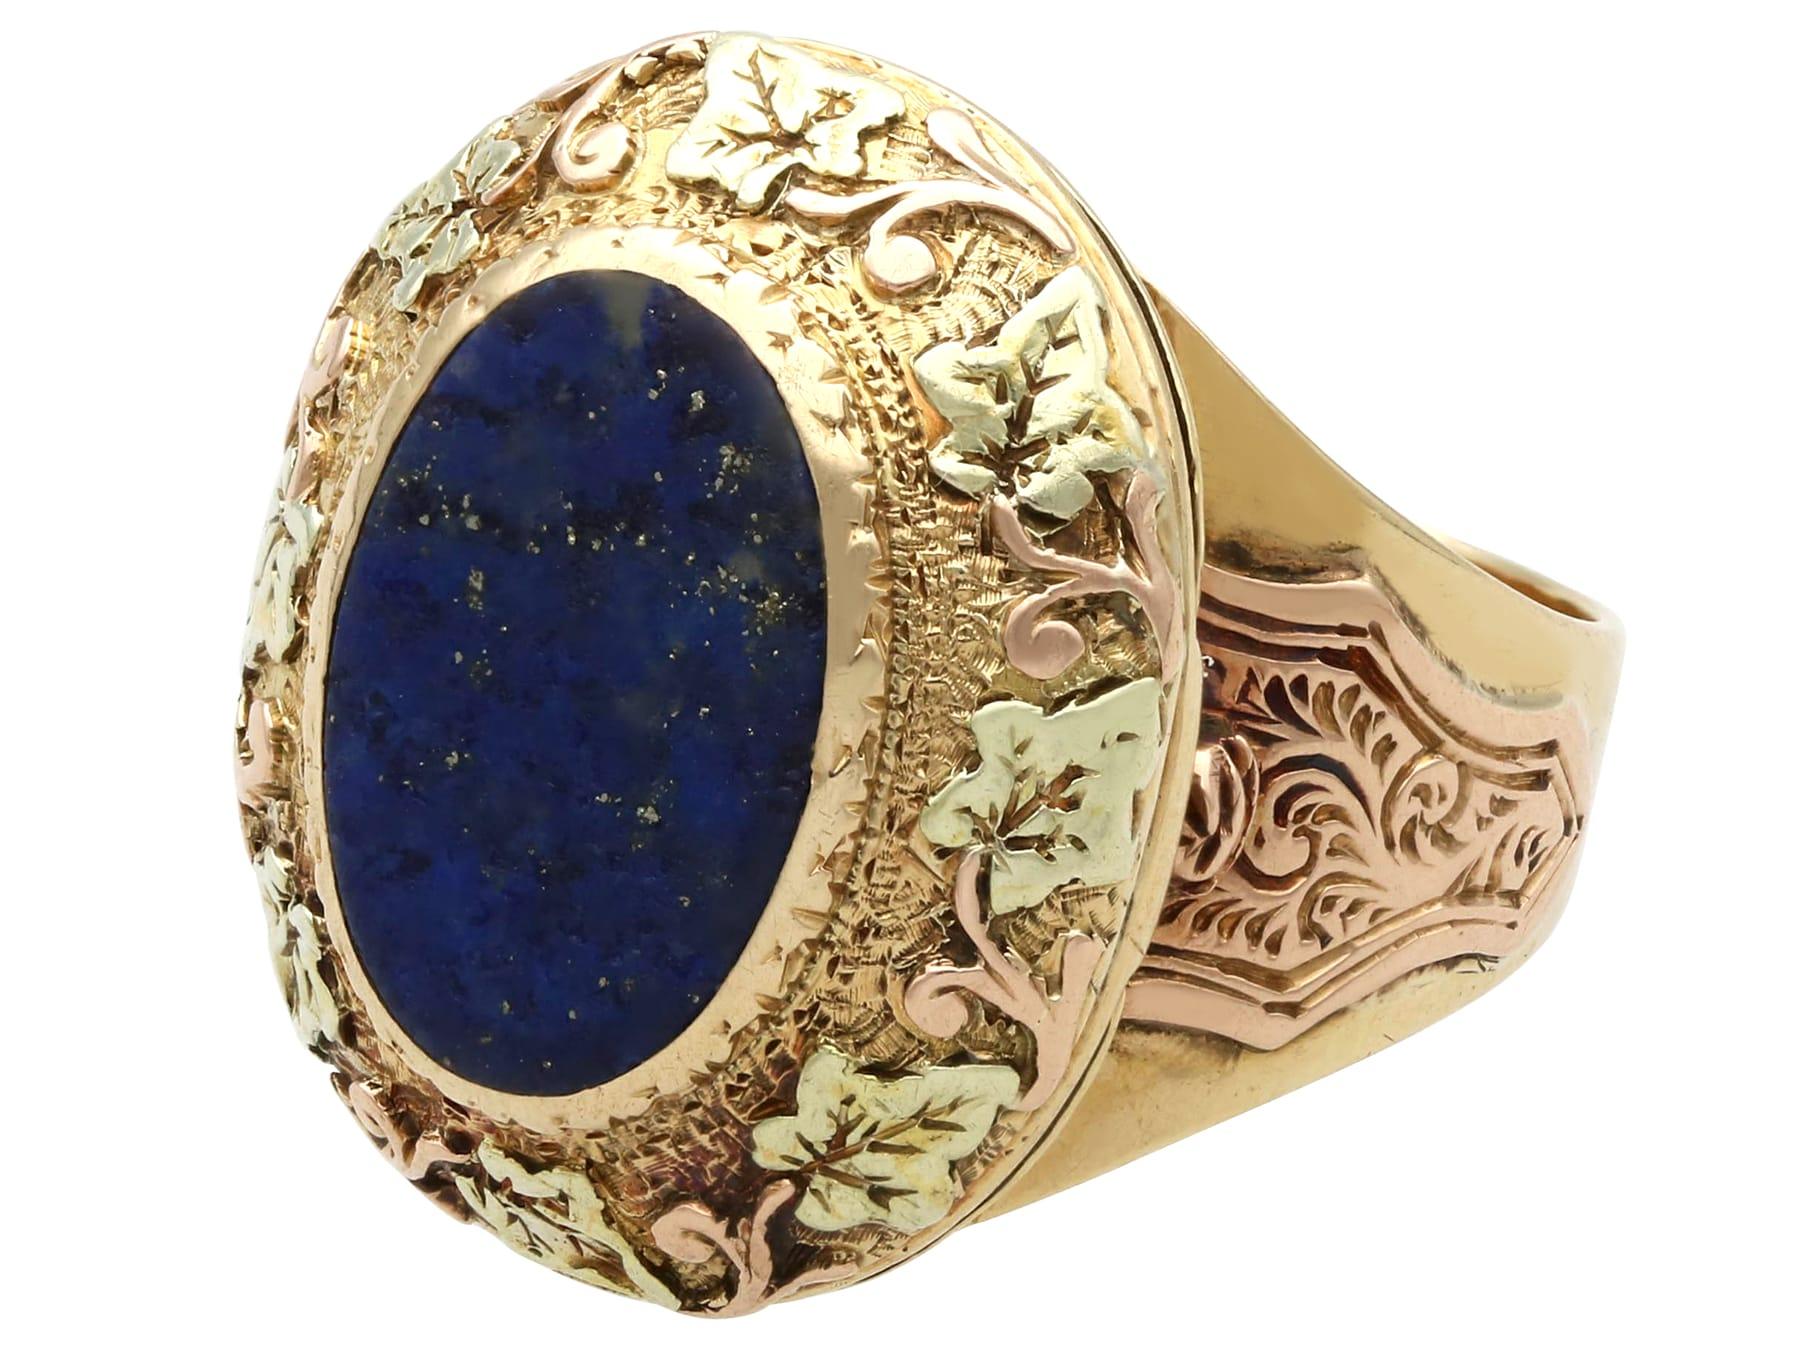 Antique 3.02Ct Lapis Lazuli and 15k Yellow Gold Locket Ring Circa 1880 For Sale 1